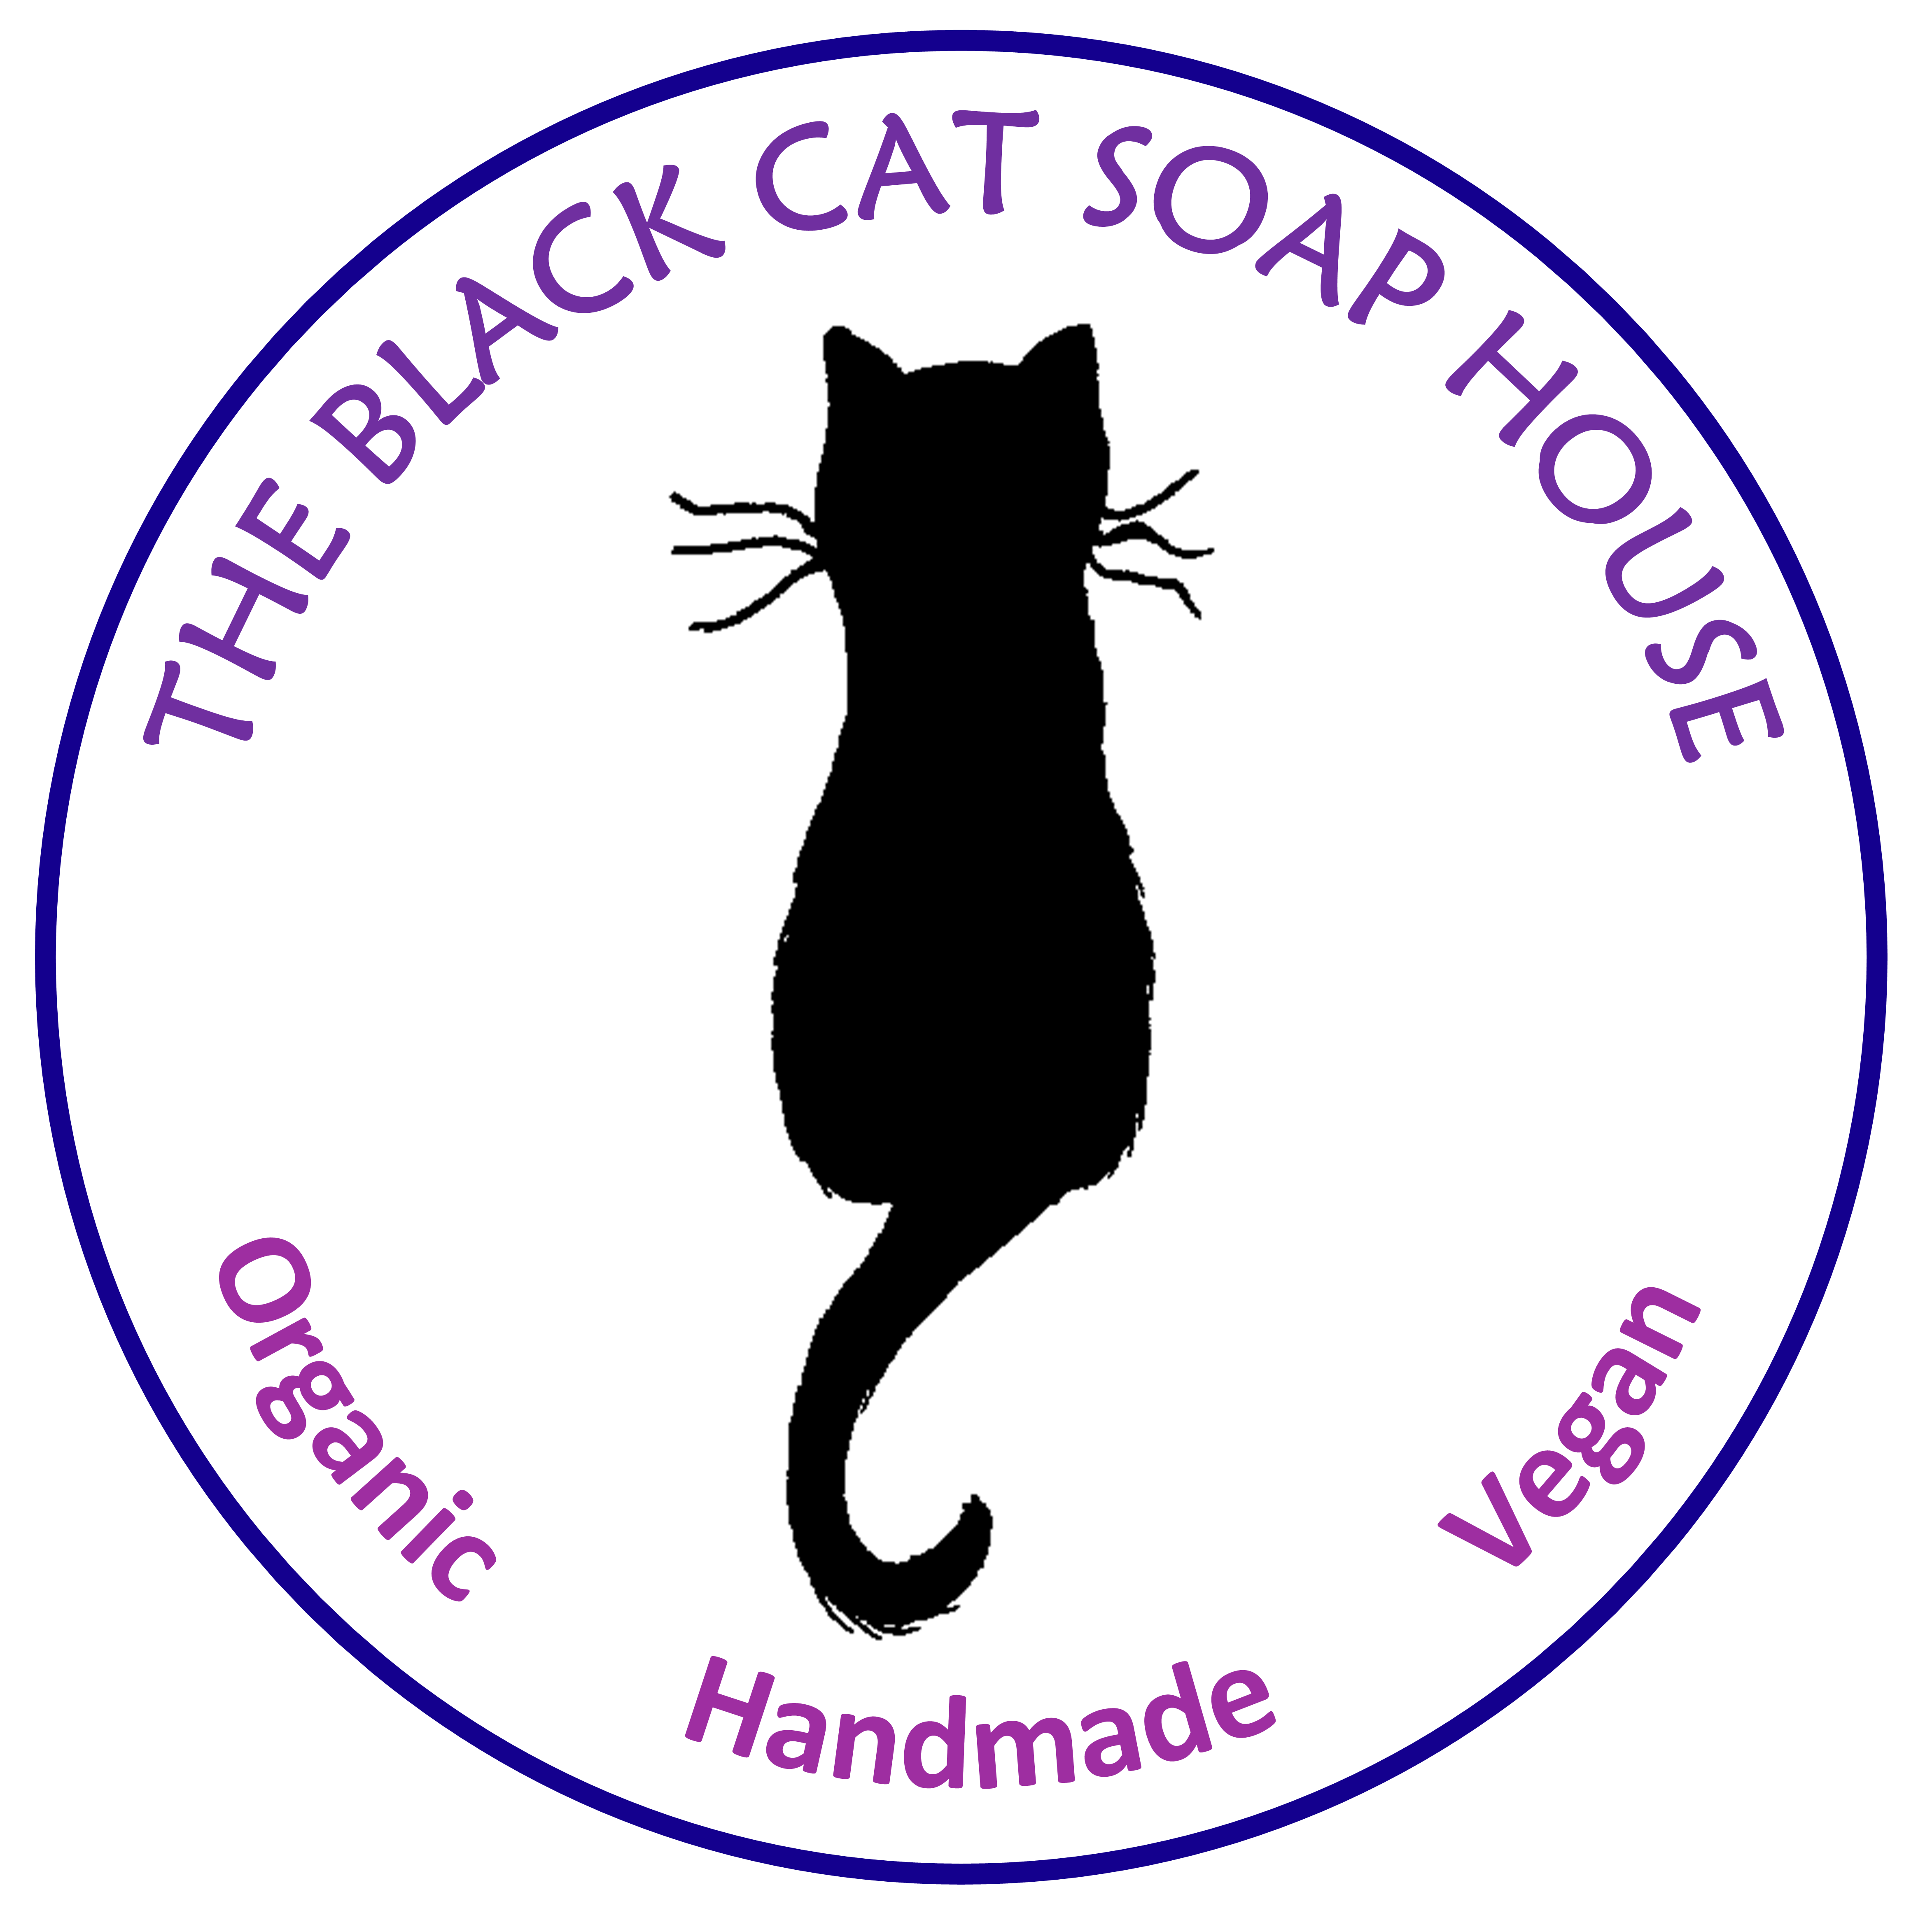 The Black Cat Soap House